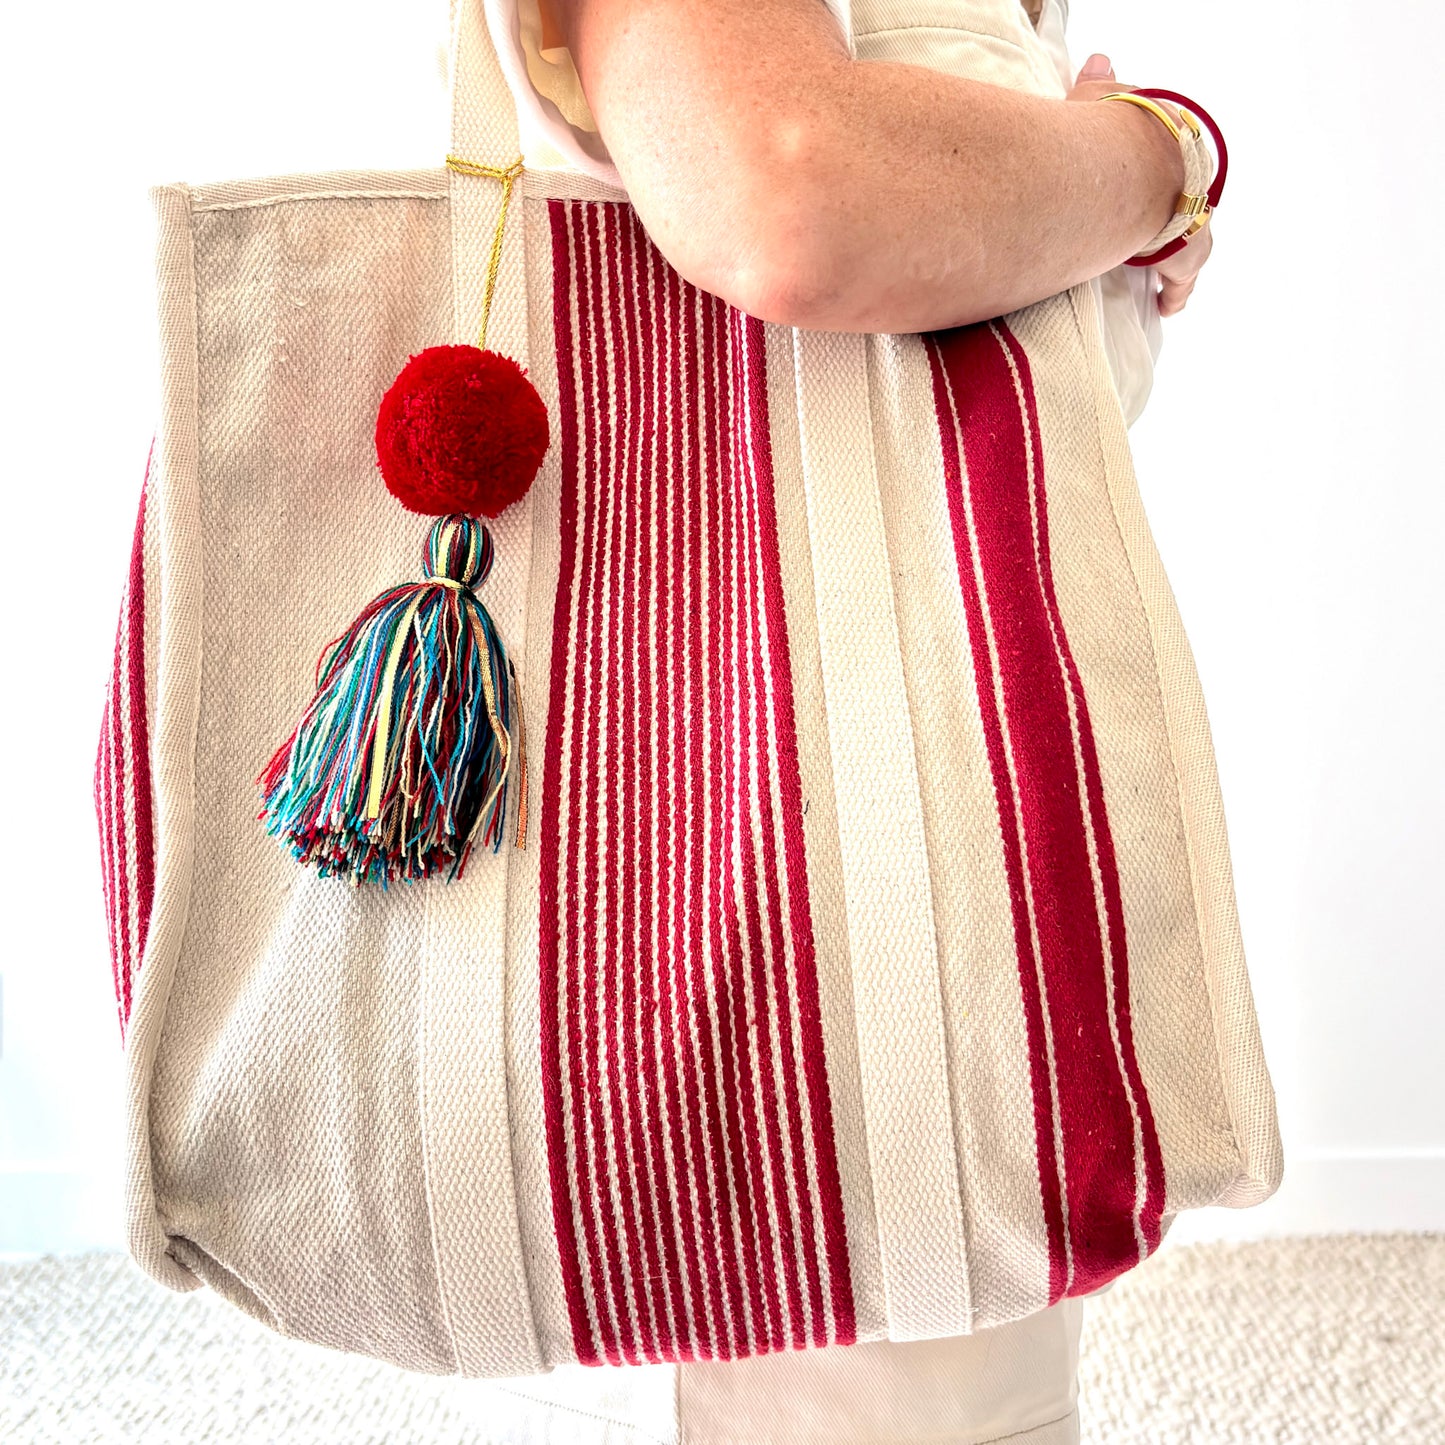 Natural canvas tote shoulder bag with red stripes and pom multi color tassel detail